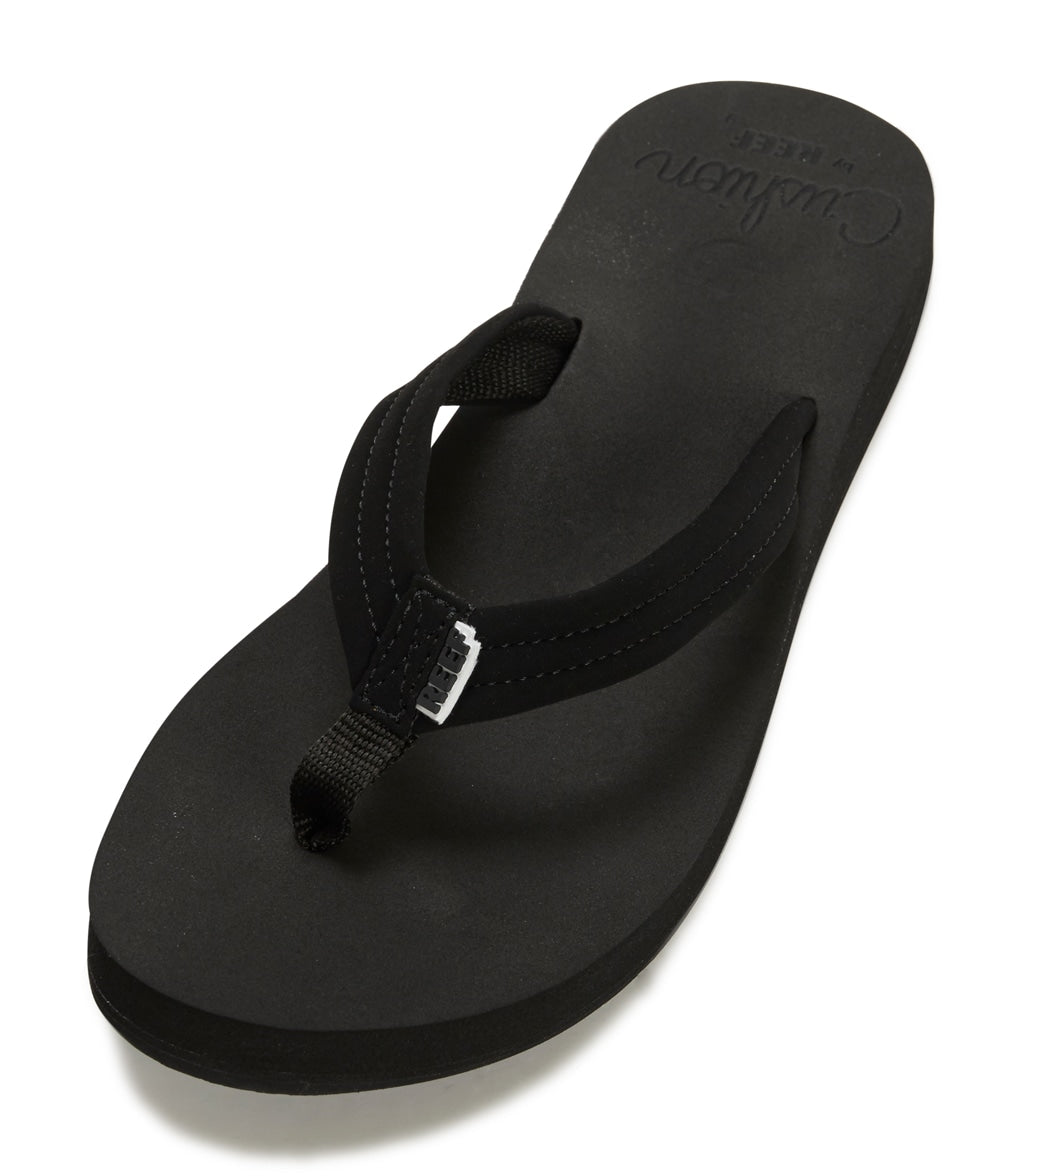  Reef Women's Sandals, Reef Cushion Breeze, Black/Black, 5